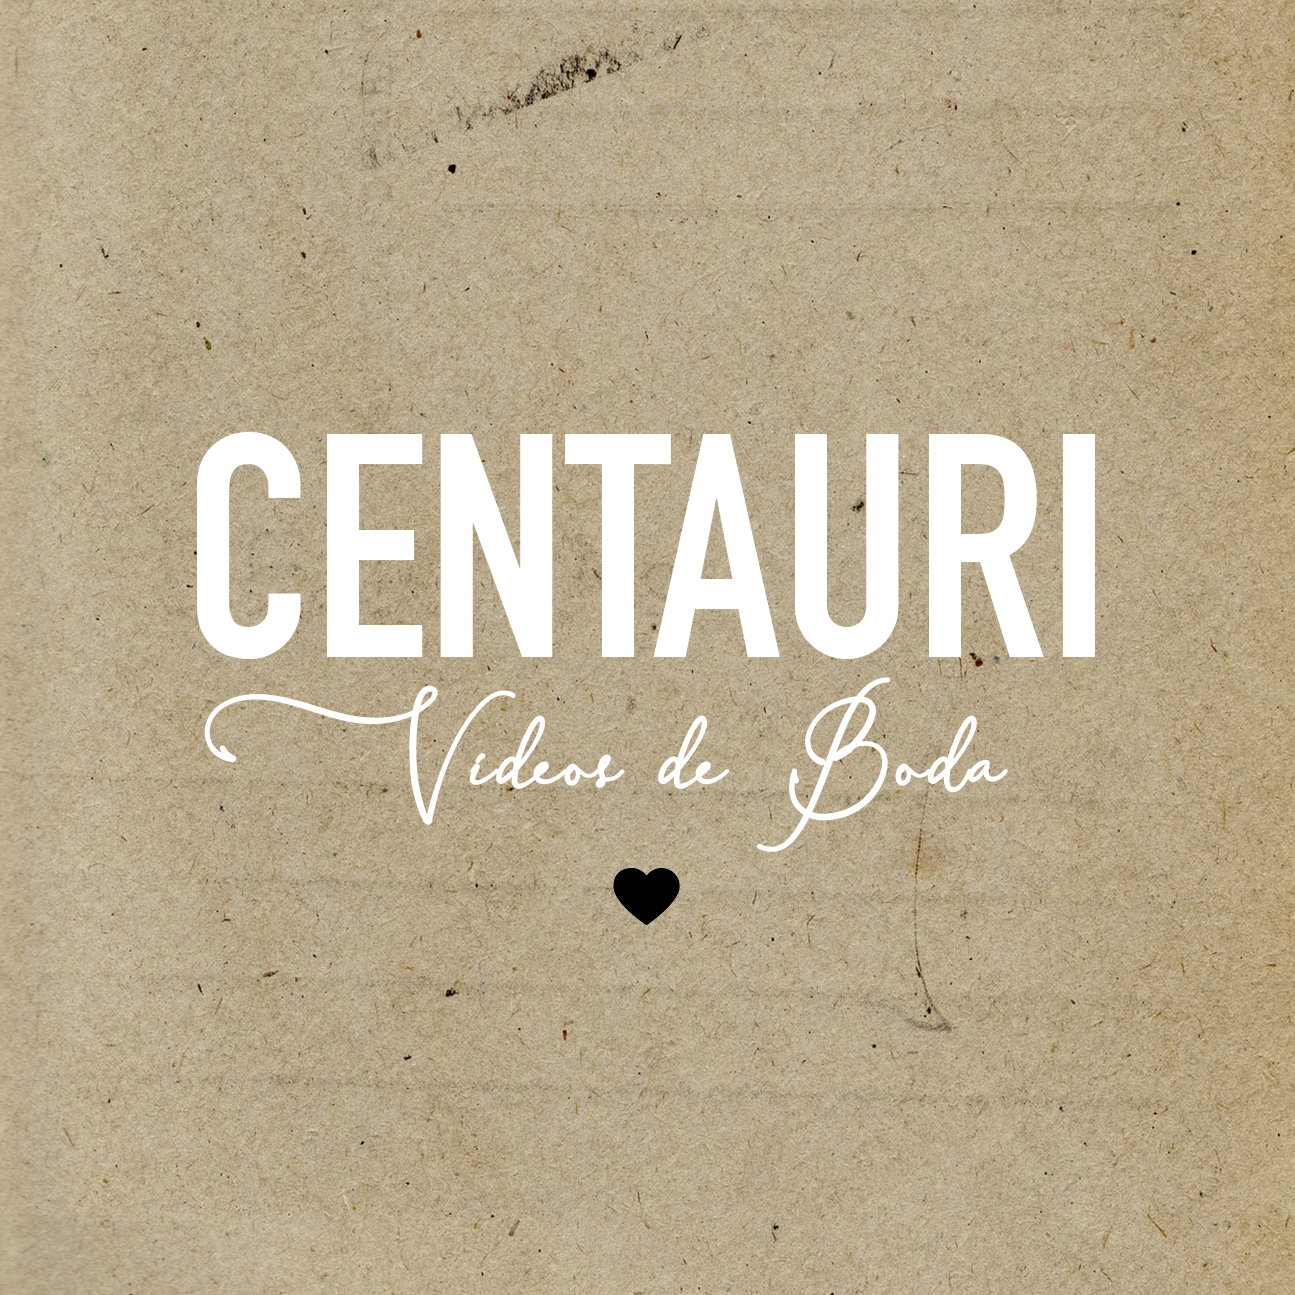 logo-centauri-wedding-vdeos